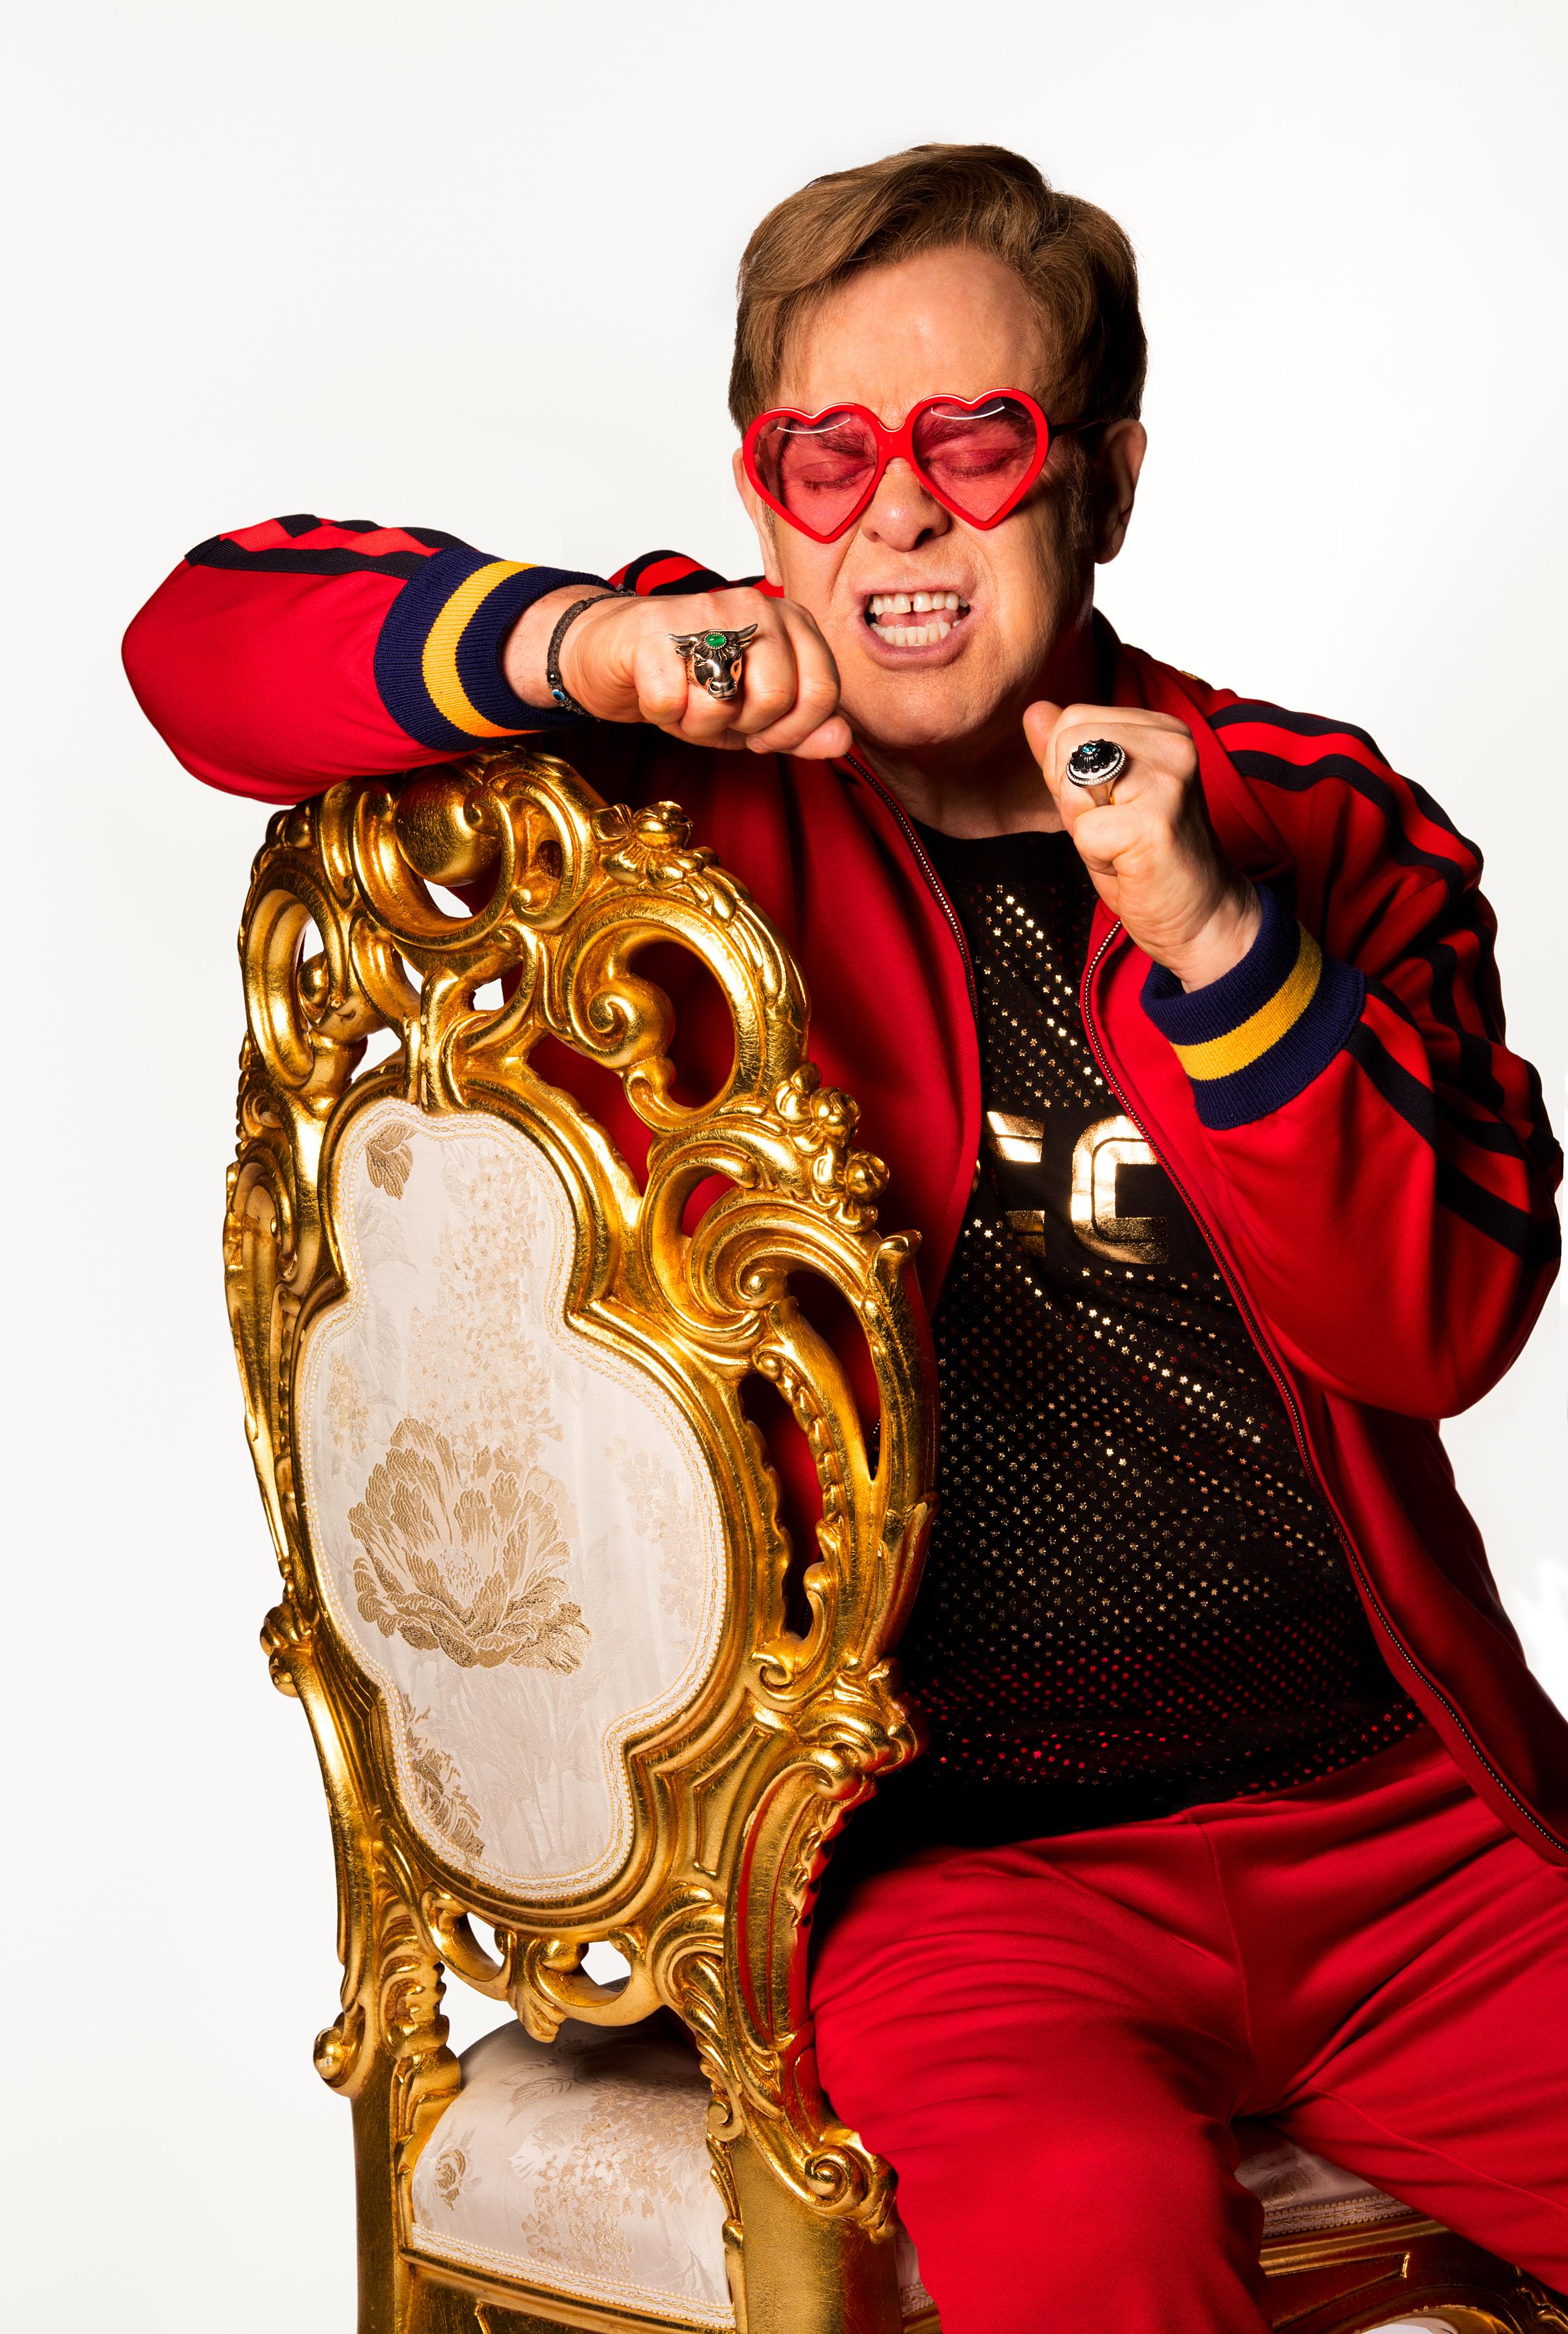 Greg Gorman Color Photograph - Elton John, 21st Century, Contemporary, Celebrity, Photography